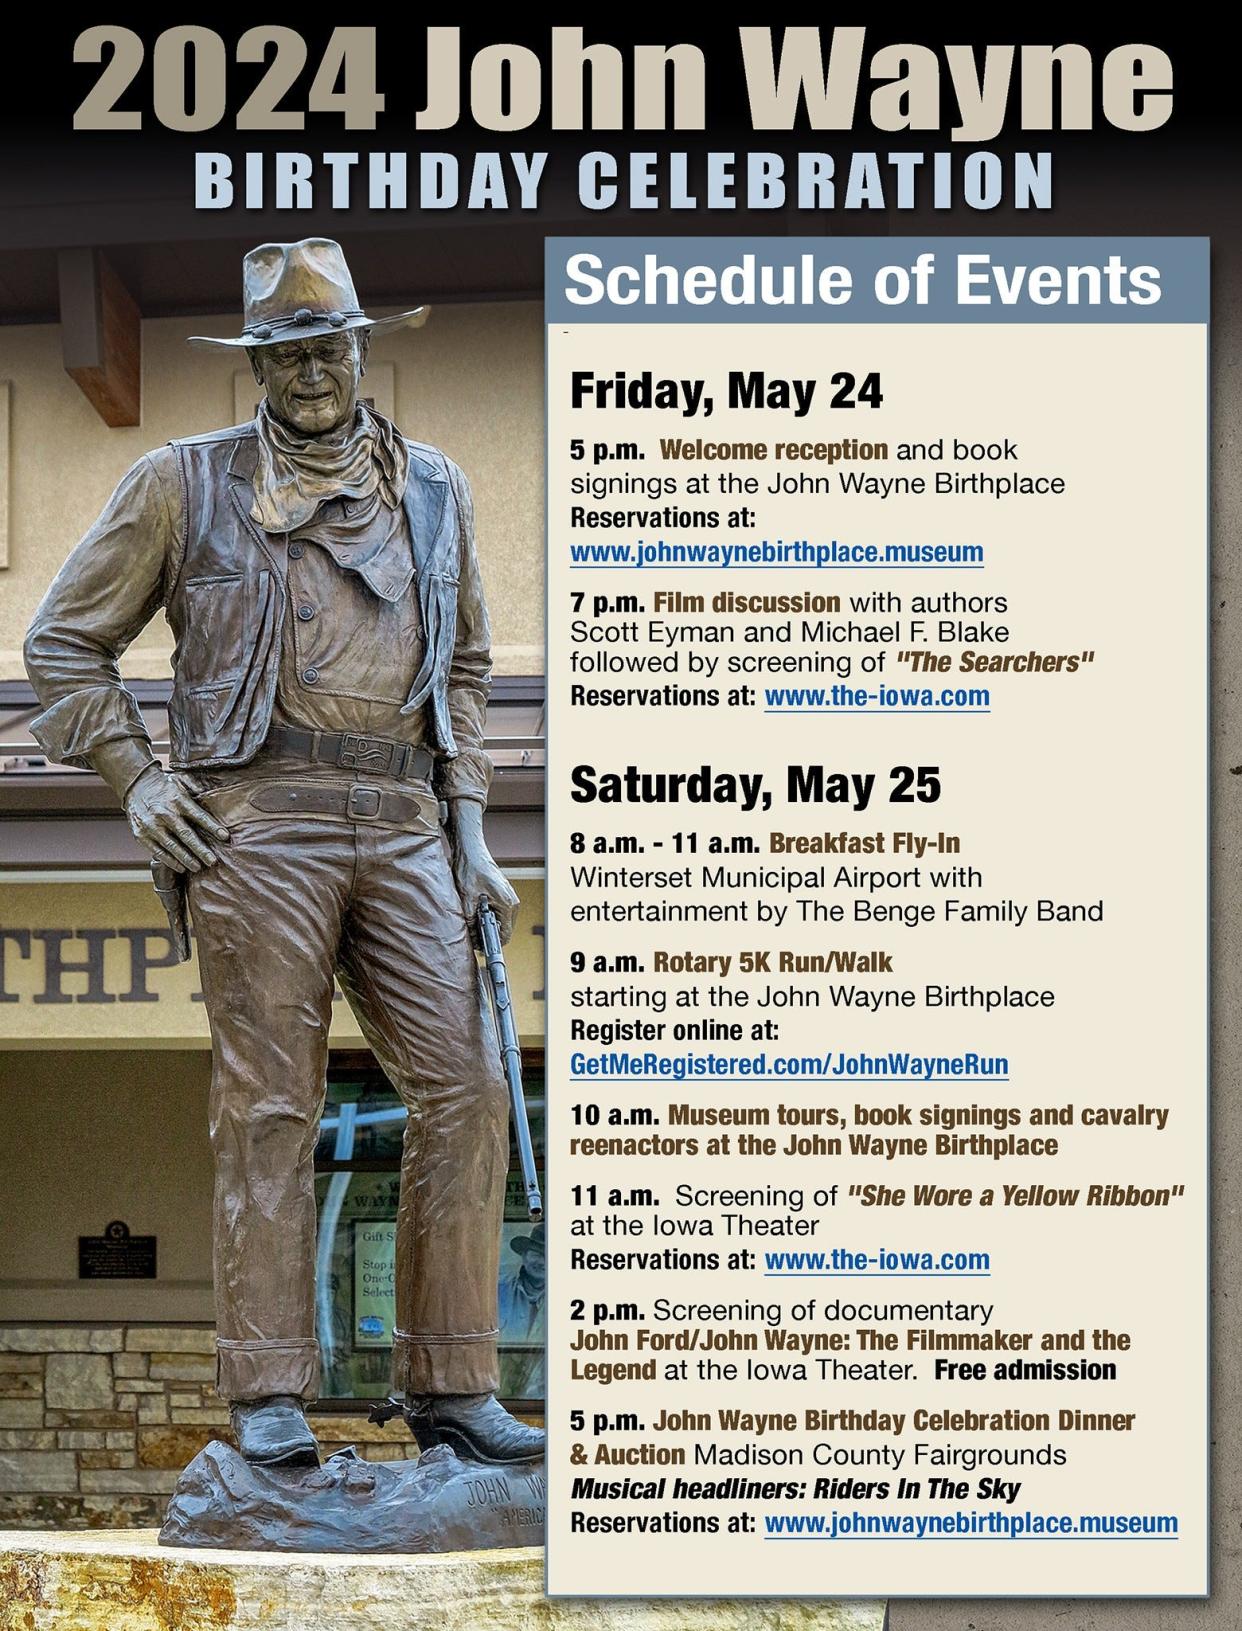 A schedule of the 2024 John Wayne Birthday Celebration.